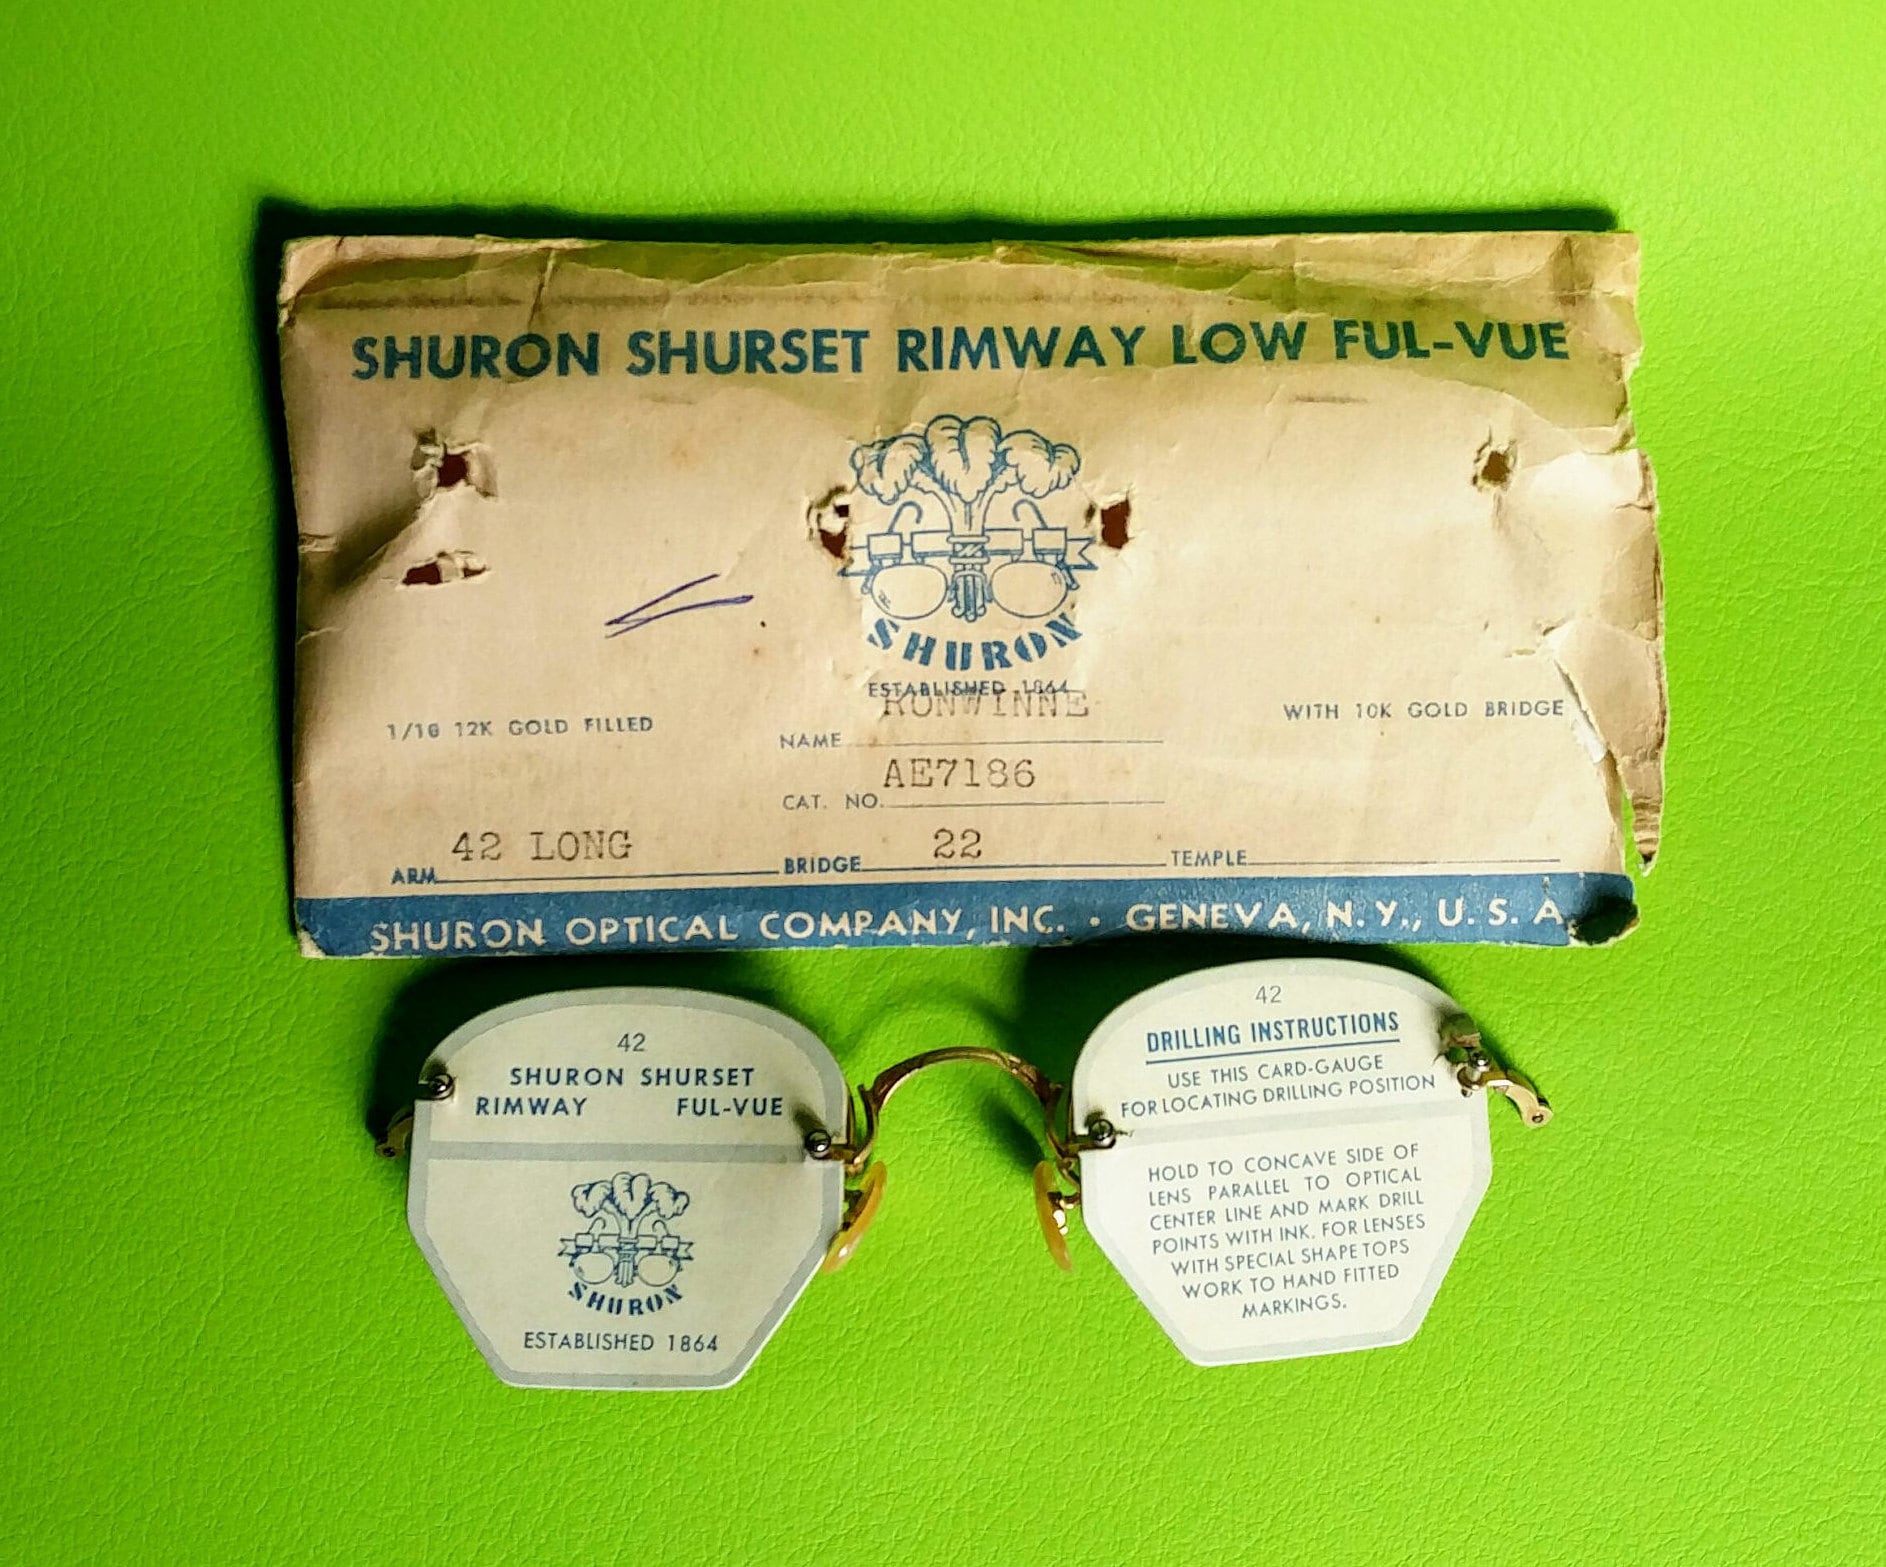 NOS Vintage 1940s Shuron Shurset Rimway Ful-vue 12kgf - Etsy